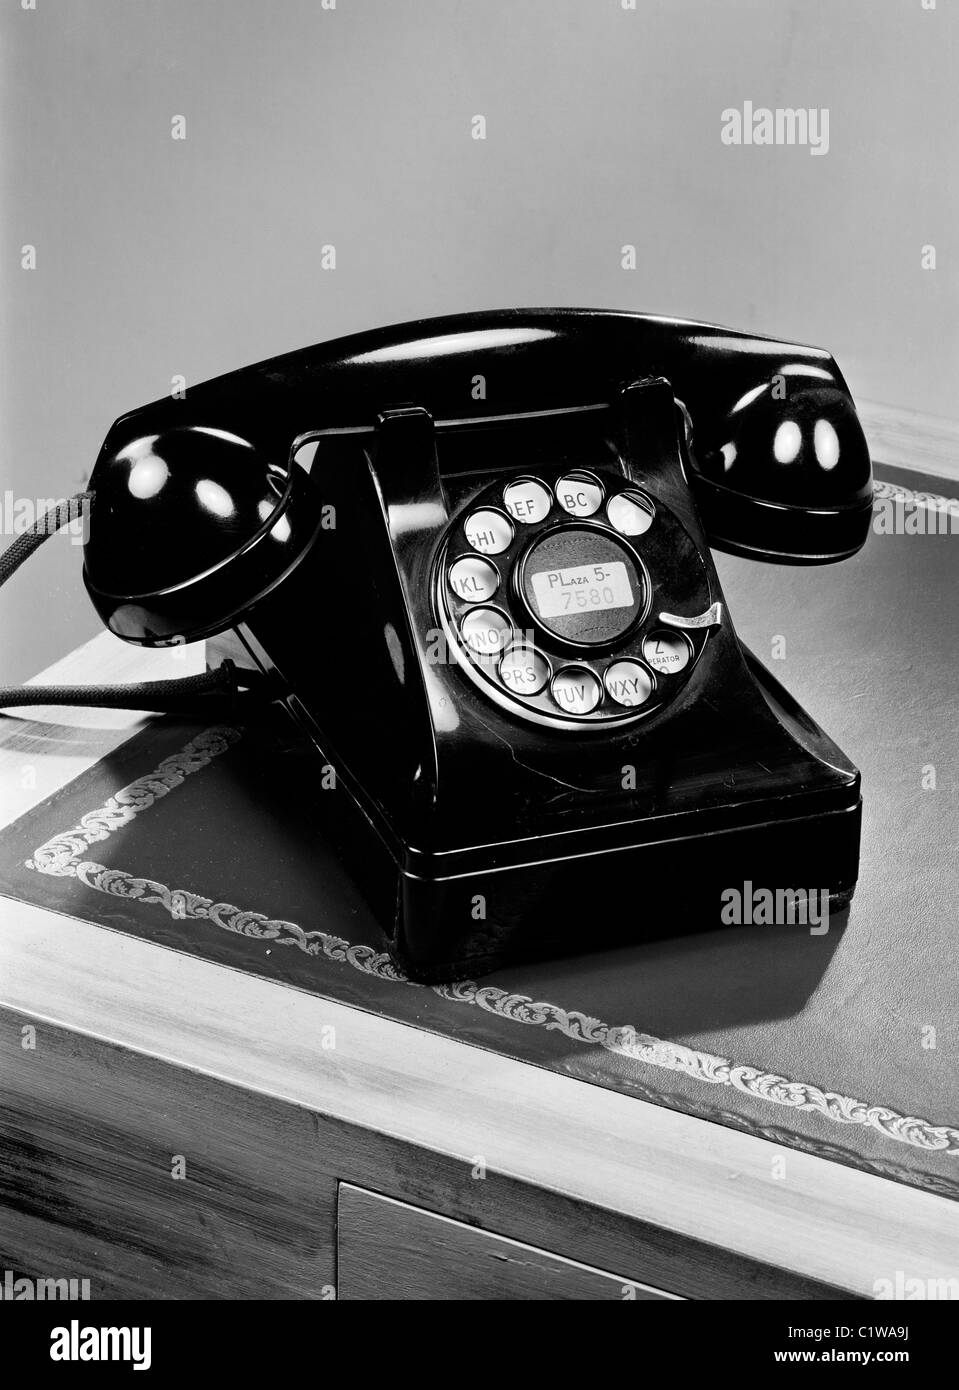 Rotary telephone Stock Photo